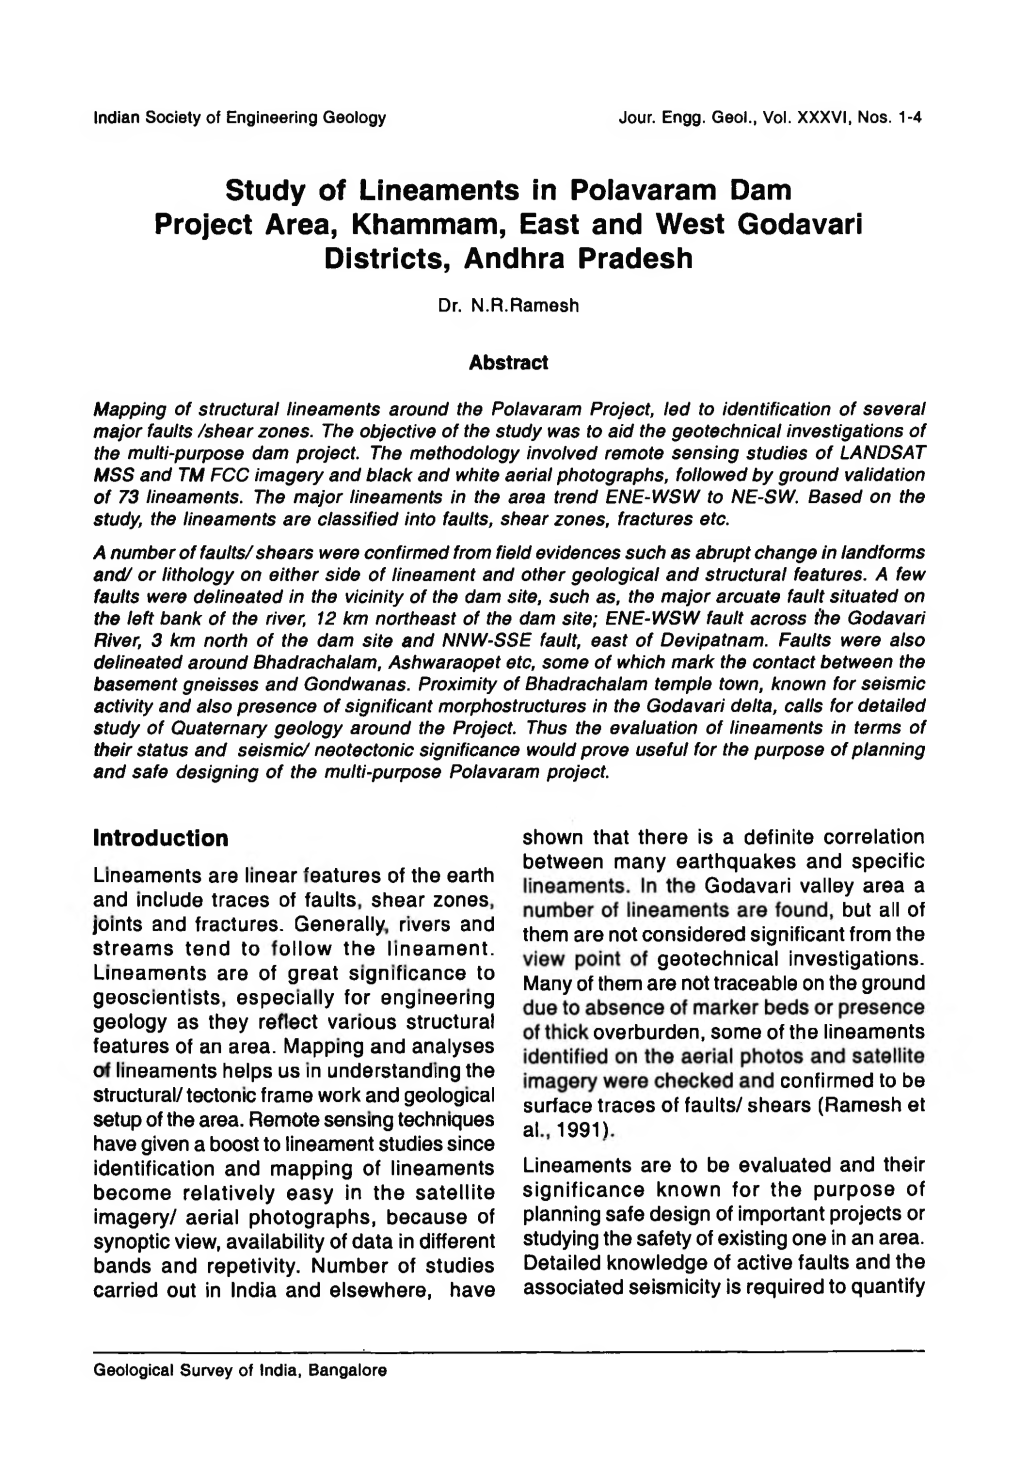 Study of Lineaments in Polavaram Dam Project Area, Khammam, East and West Godavari Districts, Andlira Pradeshi Dr